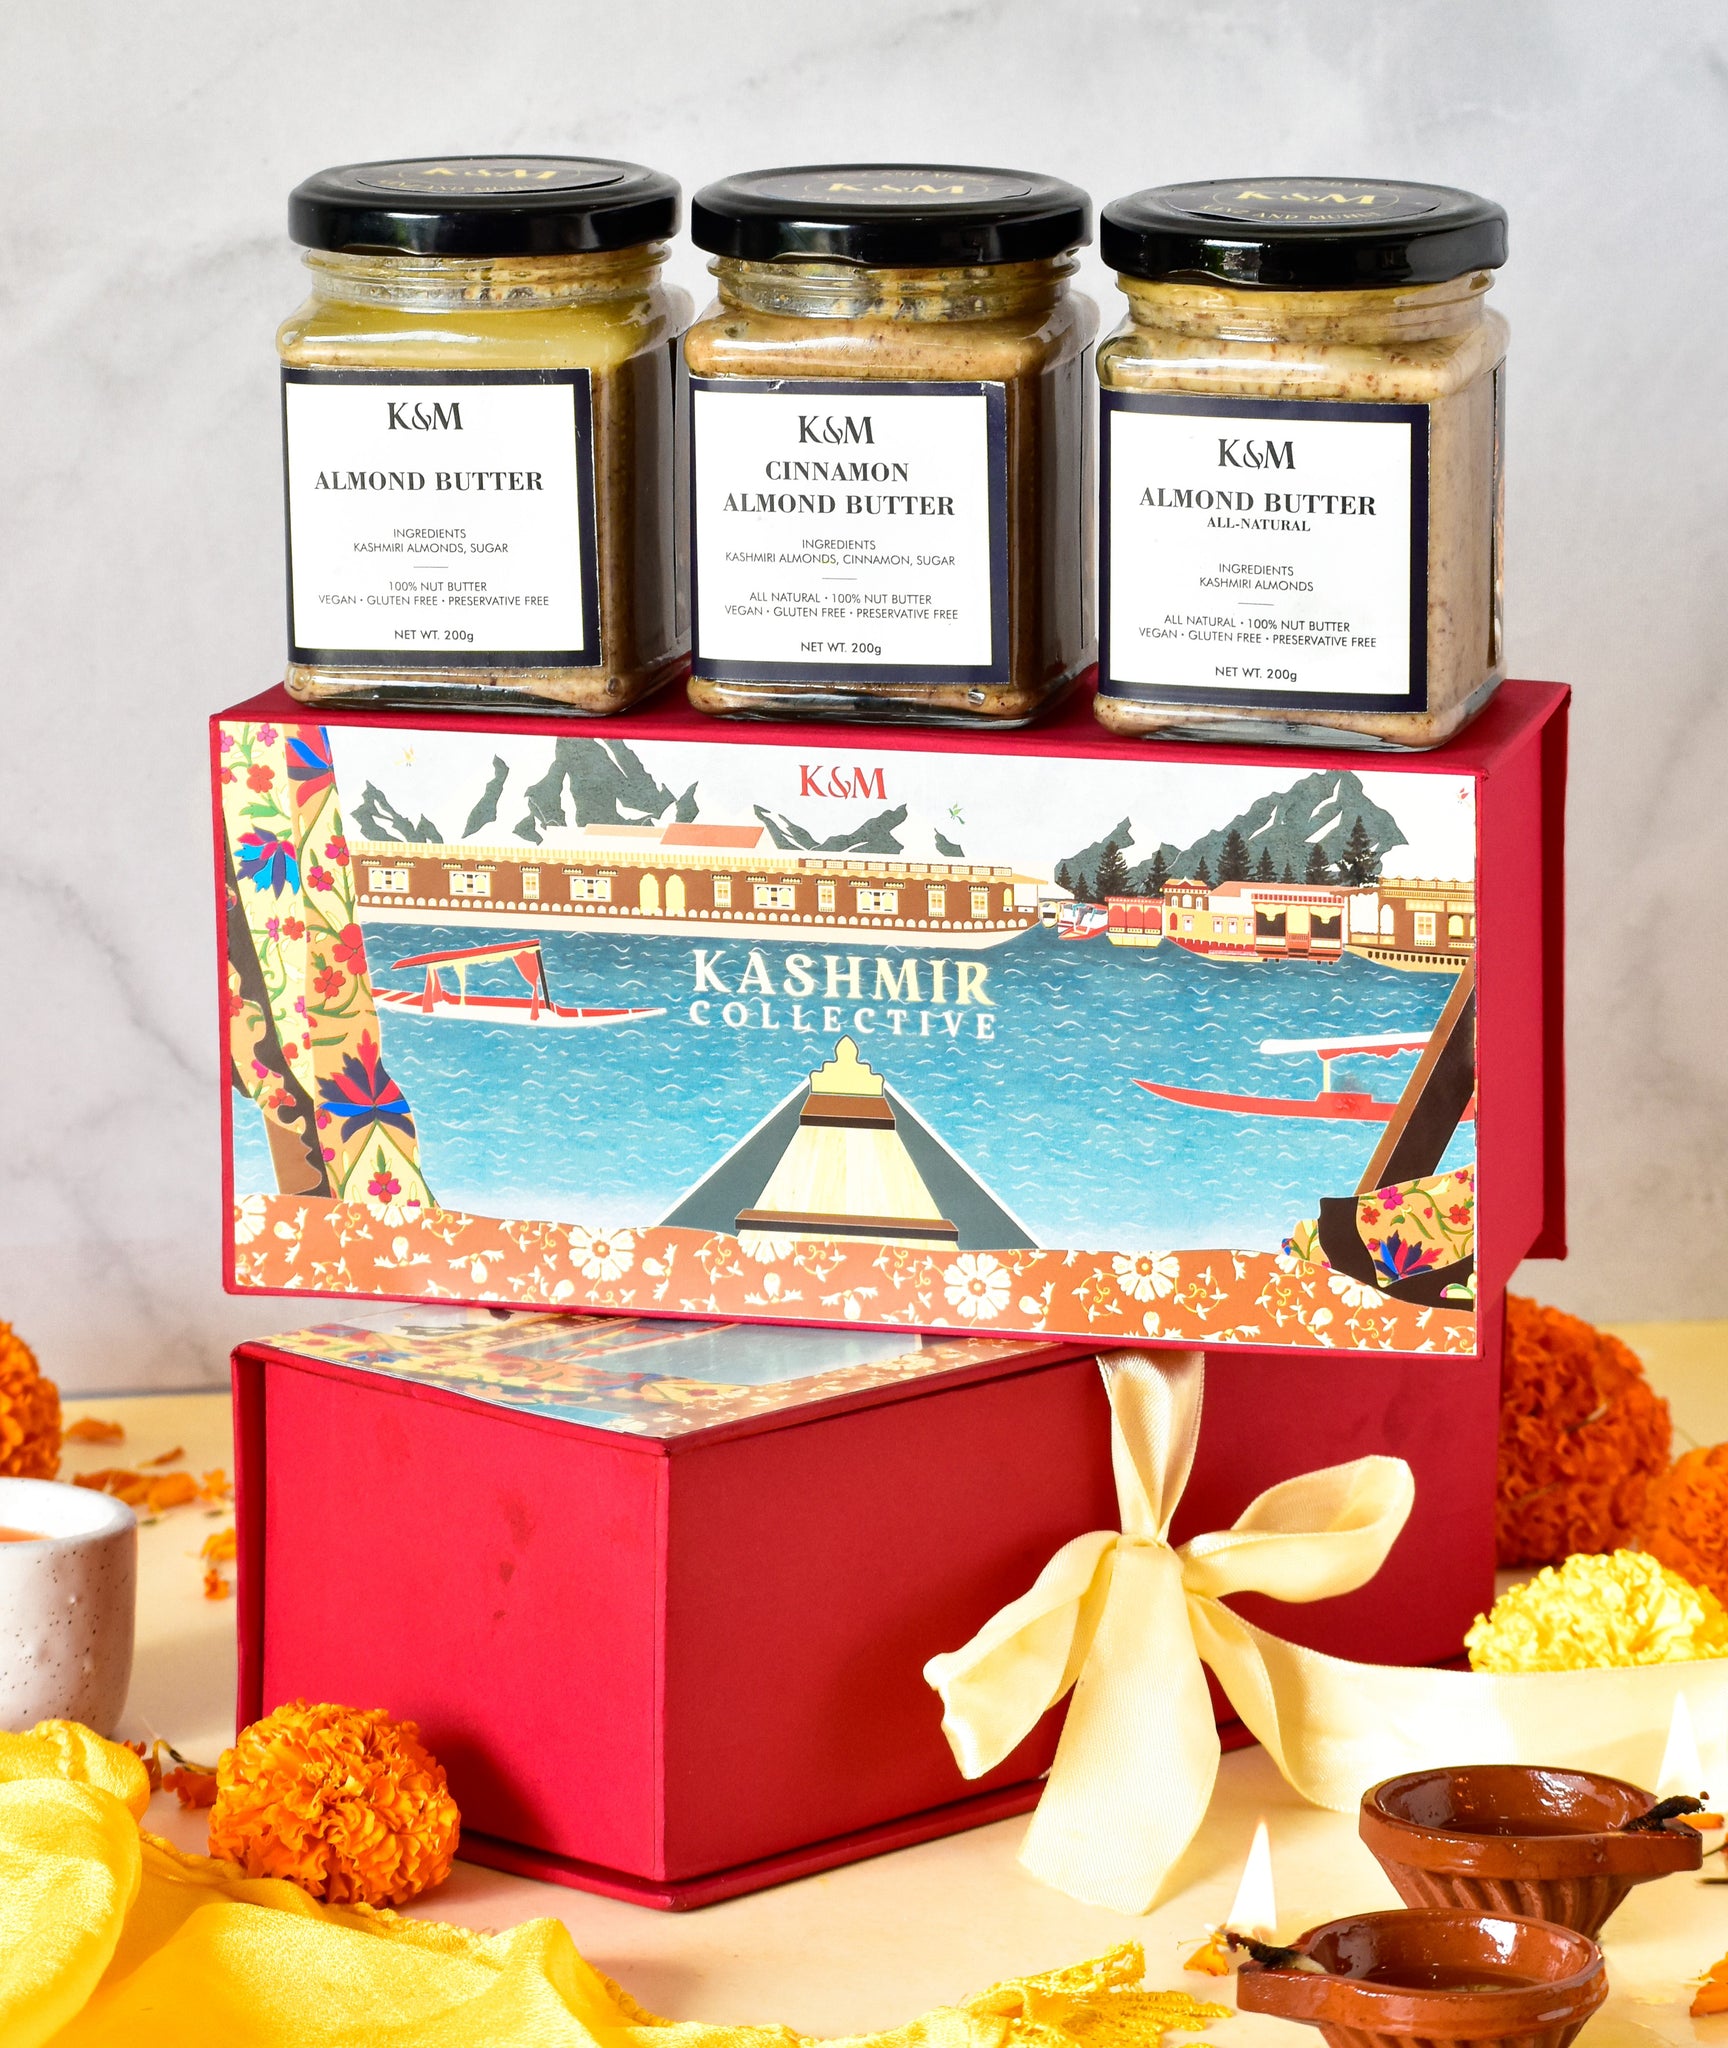 #Harud - All Natural / Cinnamon / Sweetened - 200g each